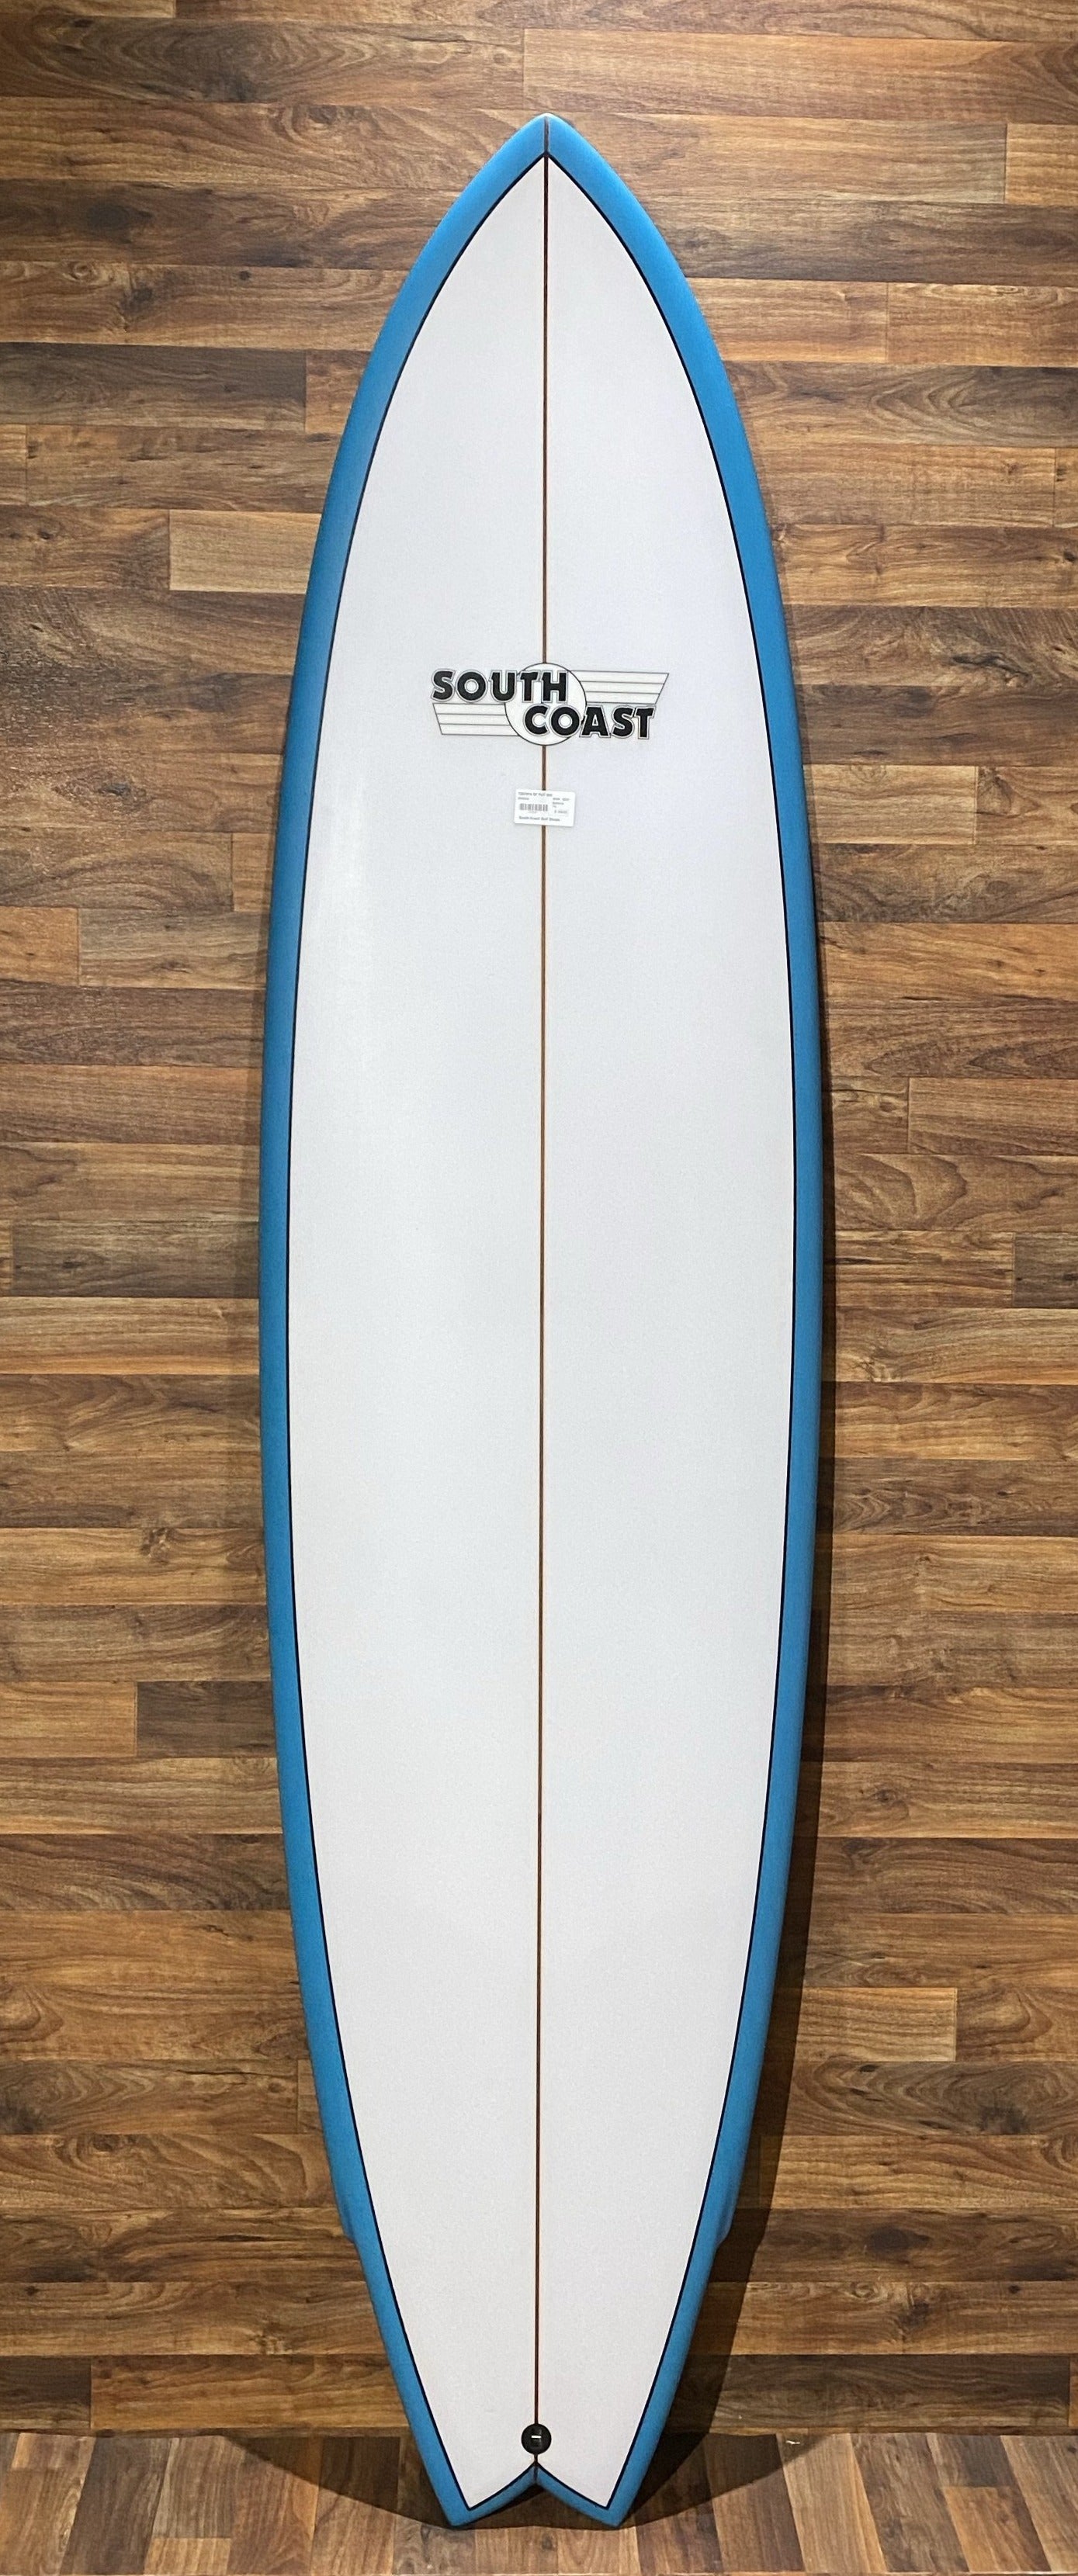 SOUTH COAST SWEGG 7'6” SURFBOARD